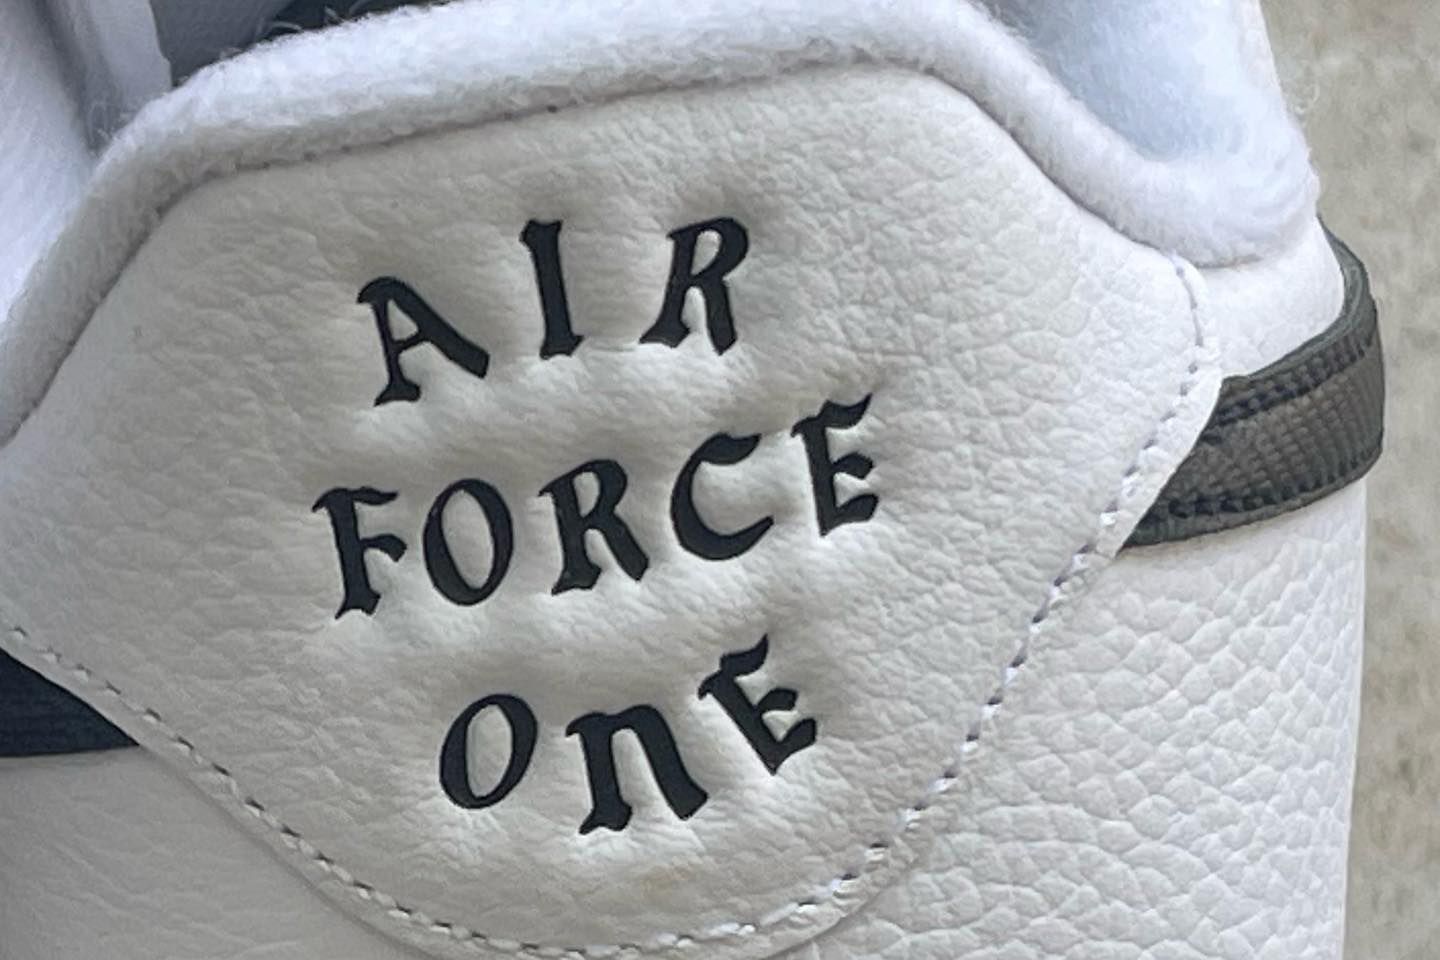 Nike Air Force 1 'Bronx Origins'